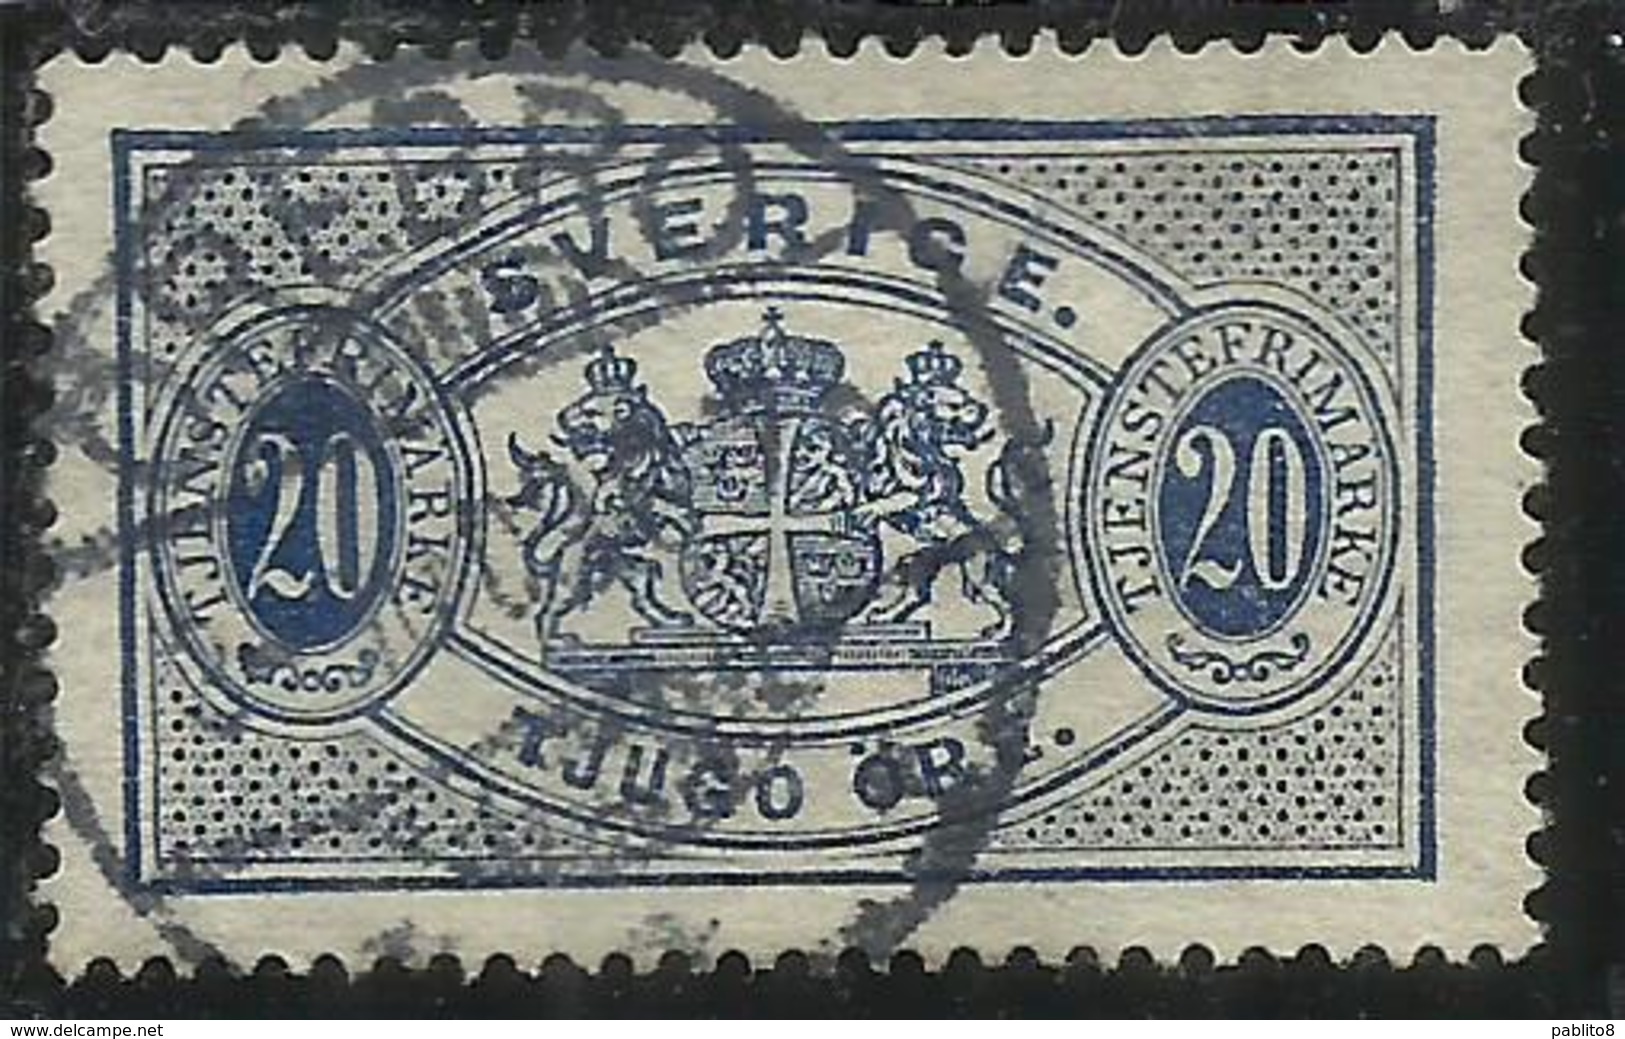 SWEDEN SVERIGE SVEZIA SUEDE 1881 1895 OFFICIAL STAMPS ORE 20o USATO USED OBLITERE' - Steuermarken